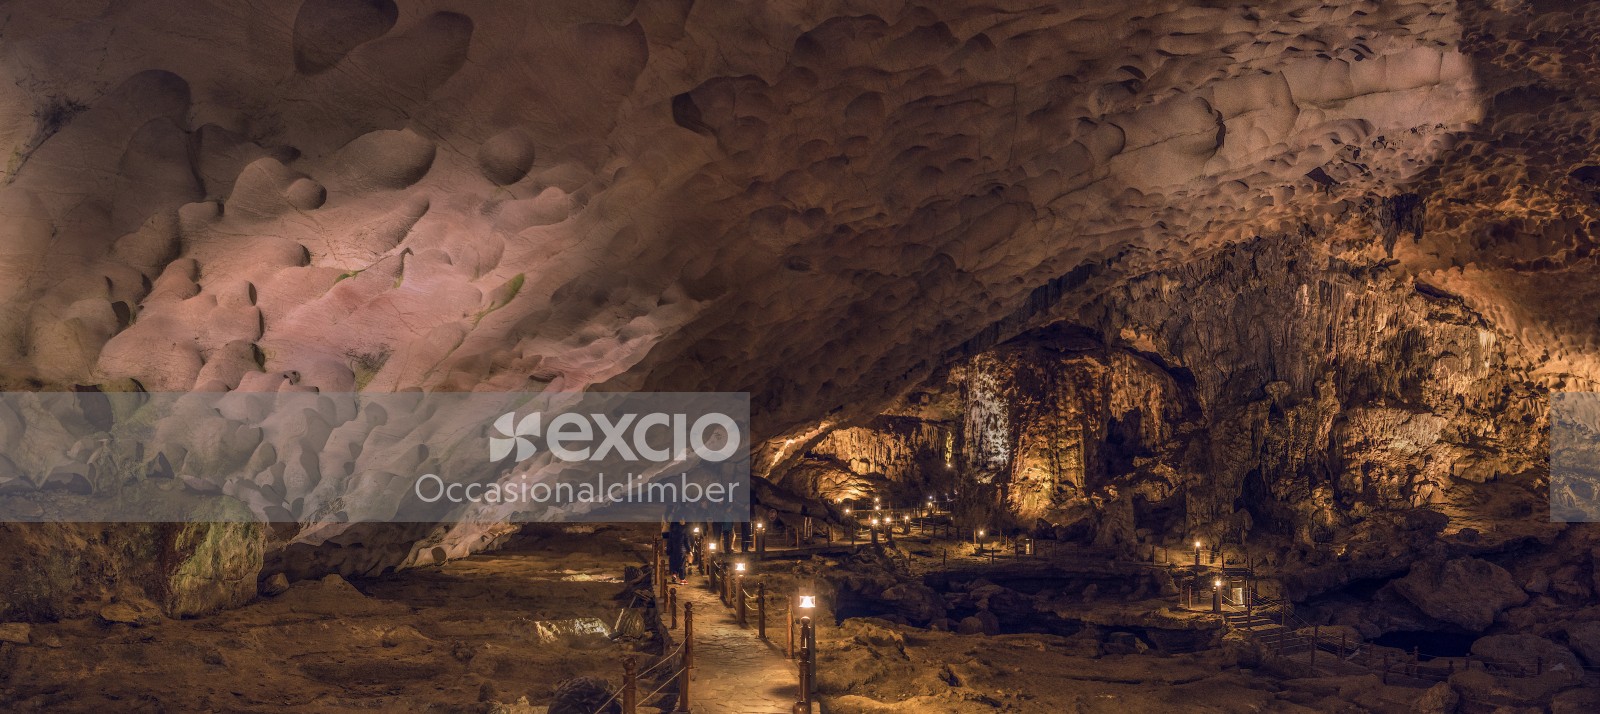 Sung Sot (Surprise) Cave, Halong Bay, Vietnam